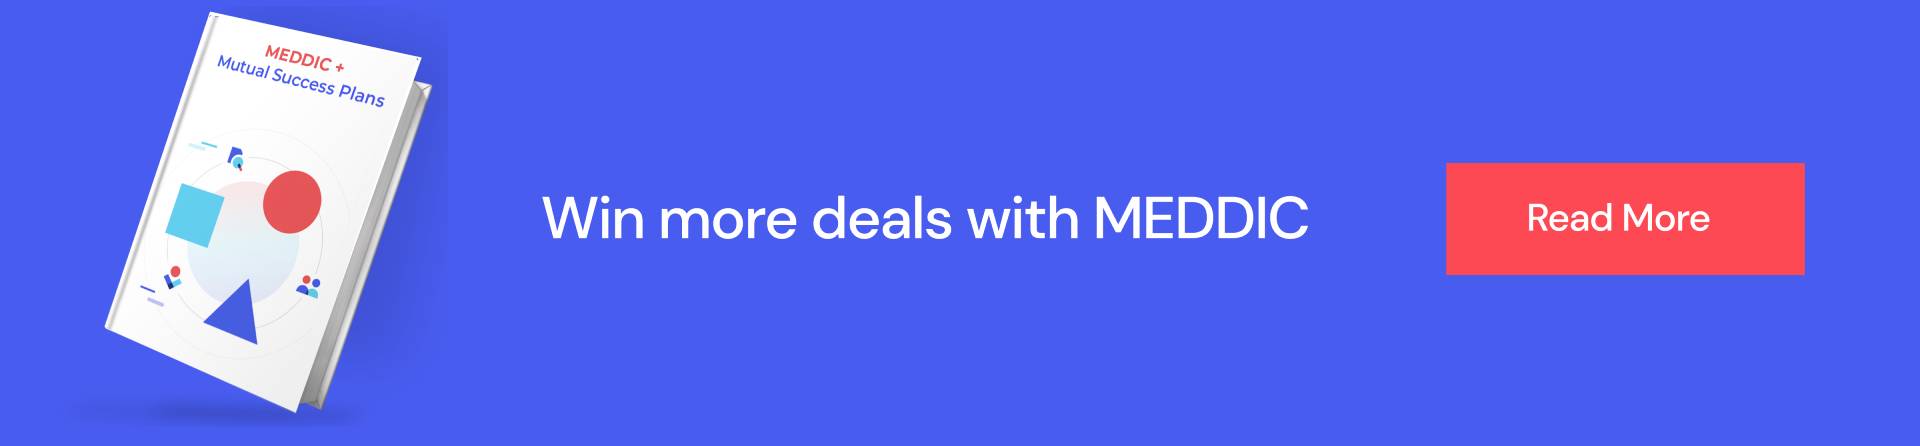 Win more deals with Meddic